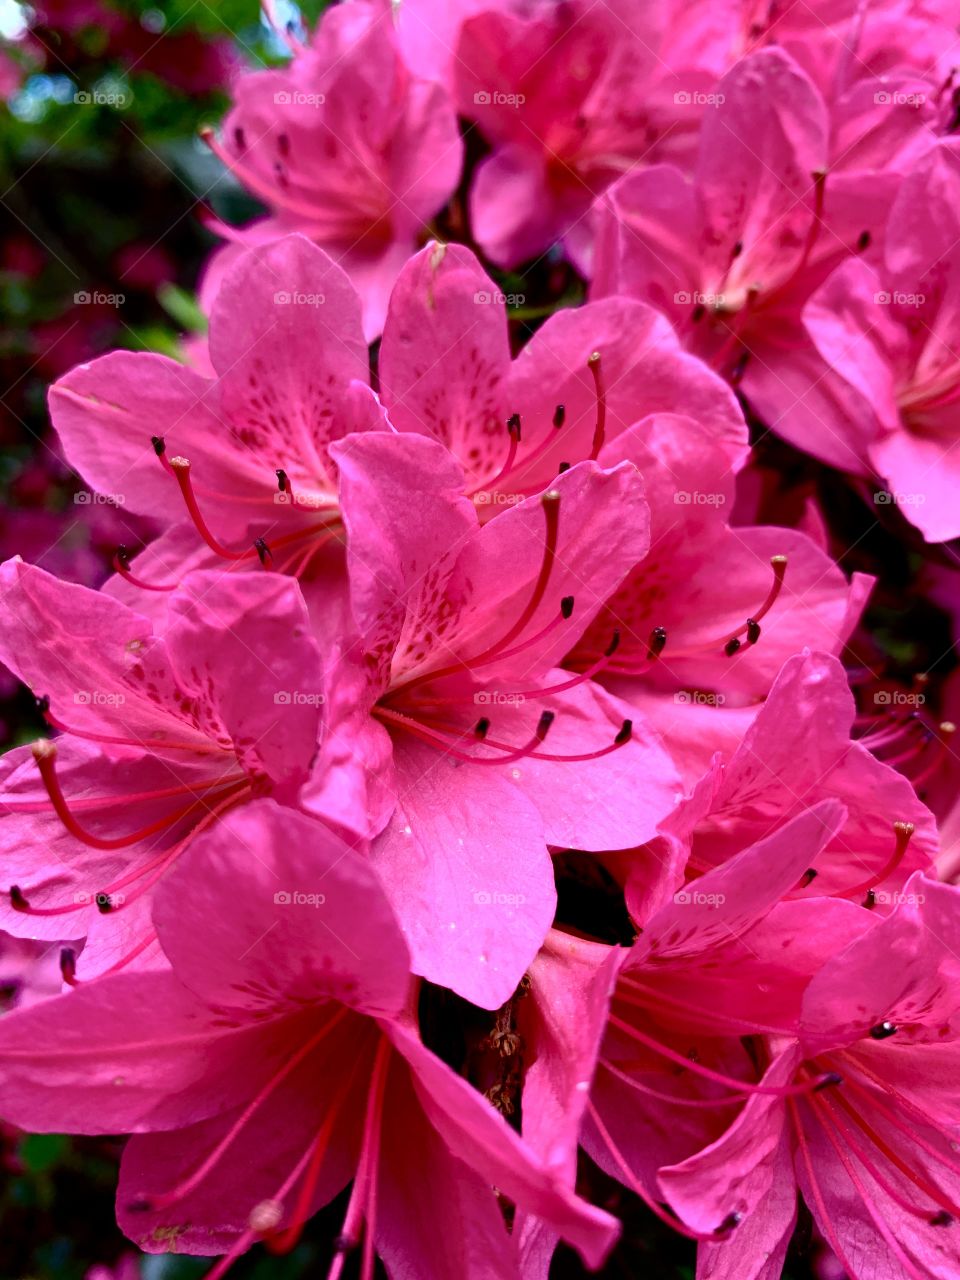 Pretty pink flowers